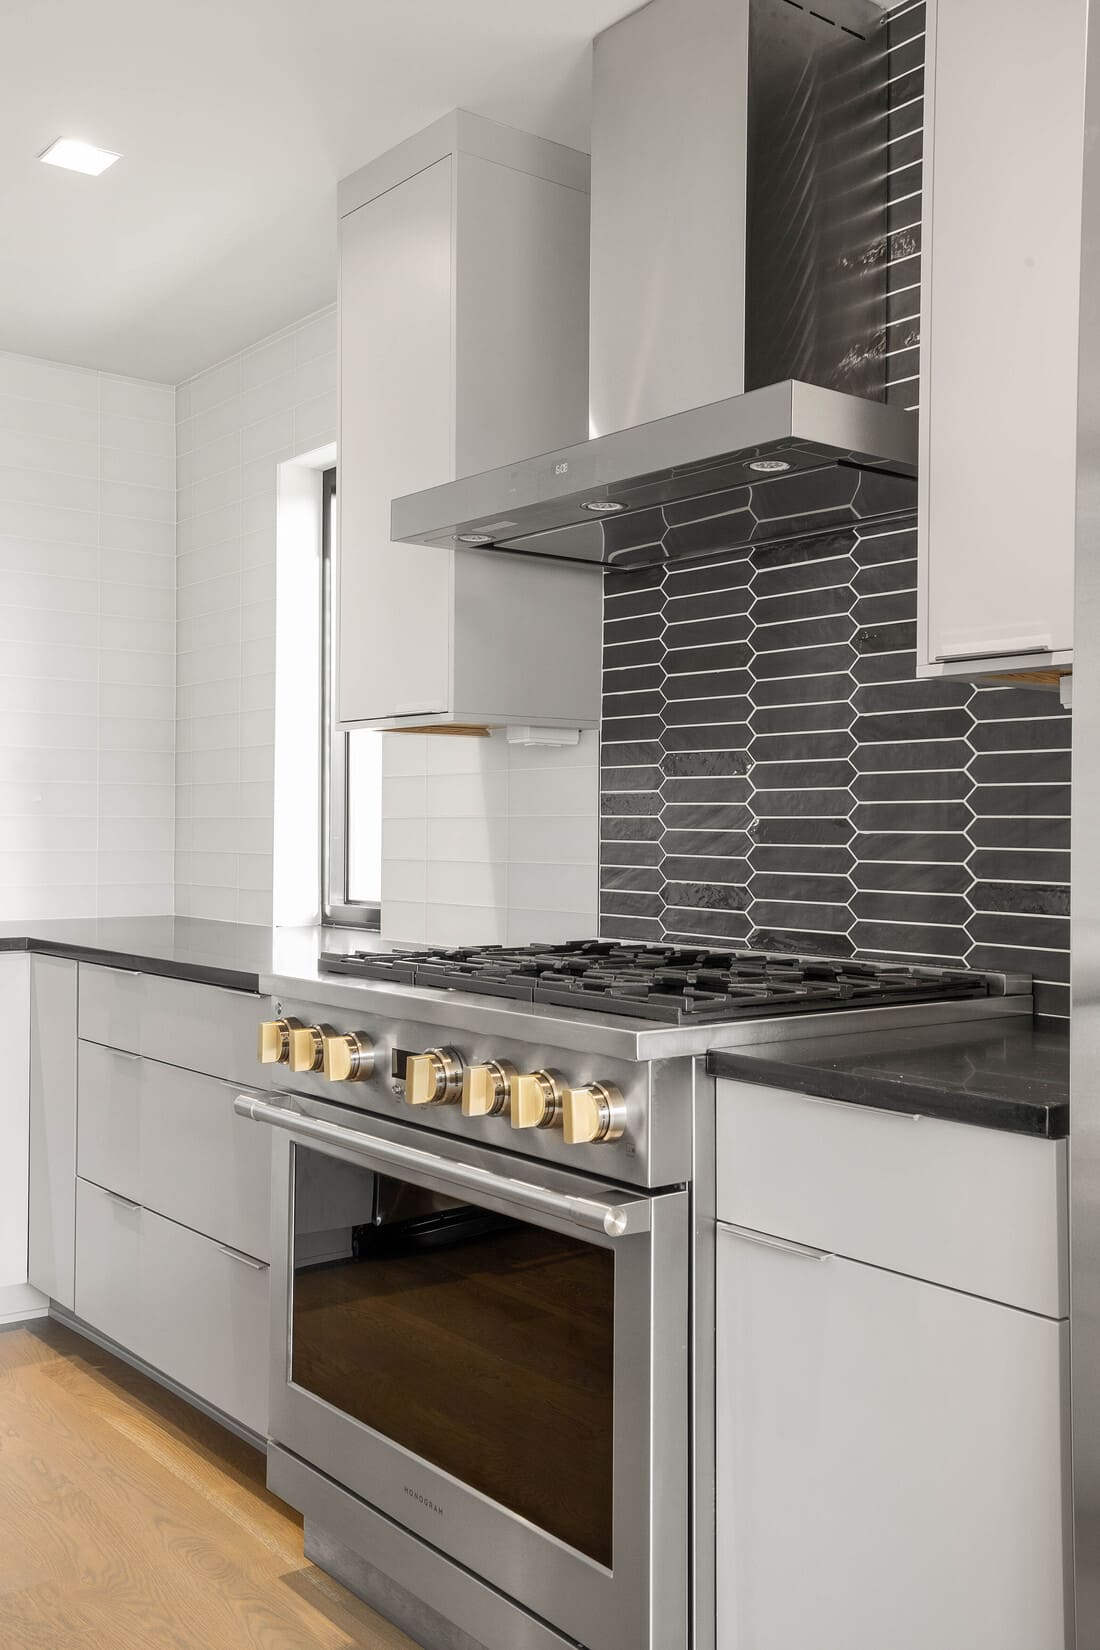 High-end stainless steel oven range and hood with elongated hexagon backsplash behind in Wilmington, DE custom kitchen